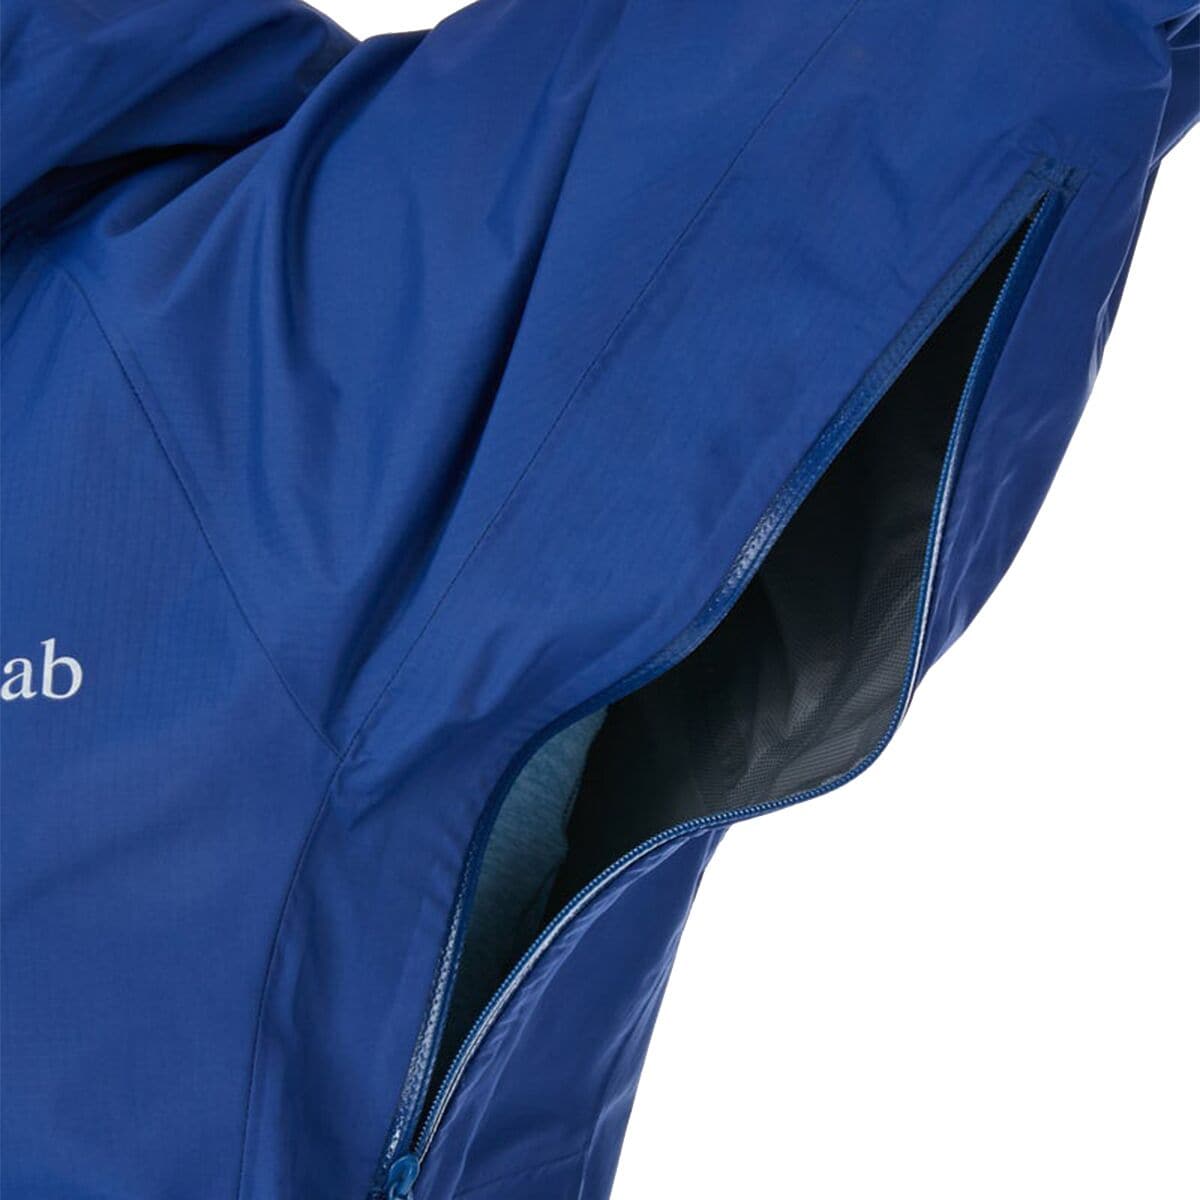 Rab Downpour Alpine Jacket - Women's - Clothing